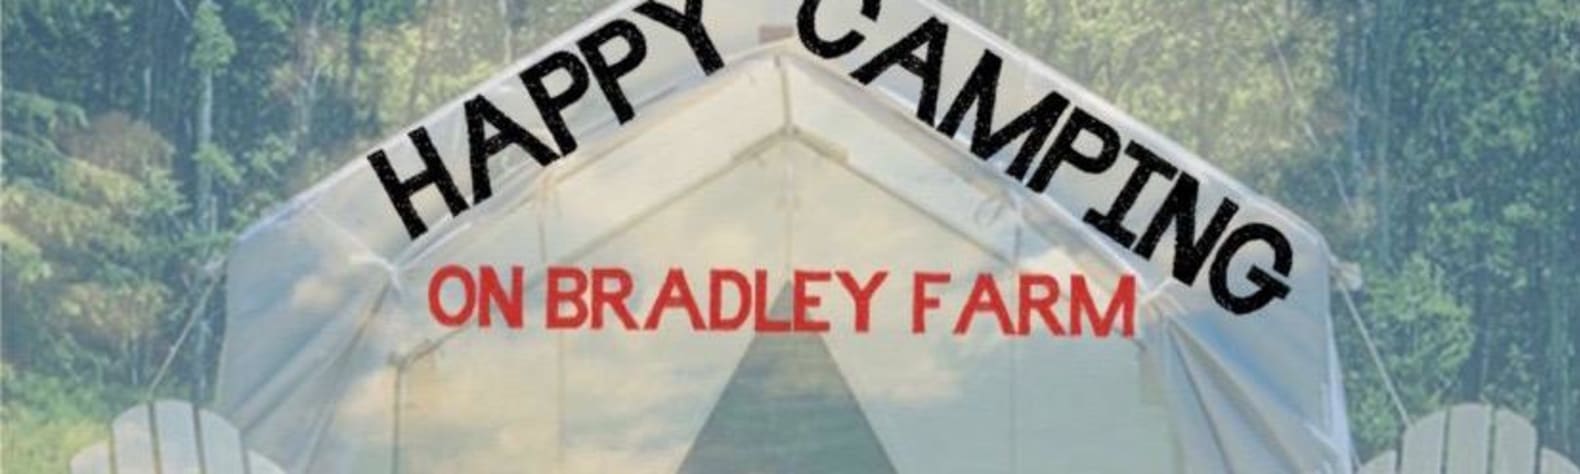 Bradley Farm Campsite